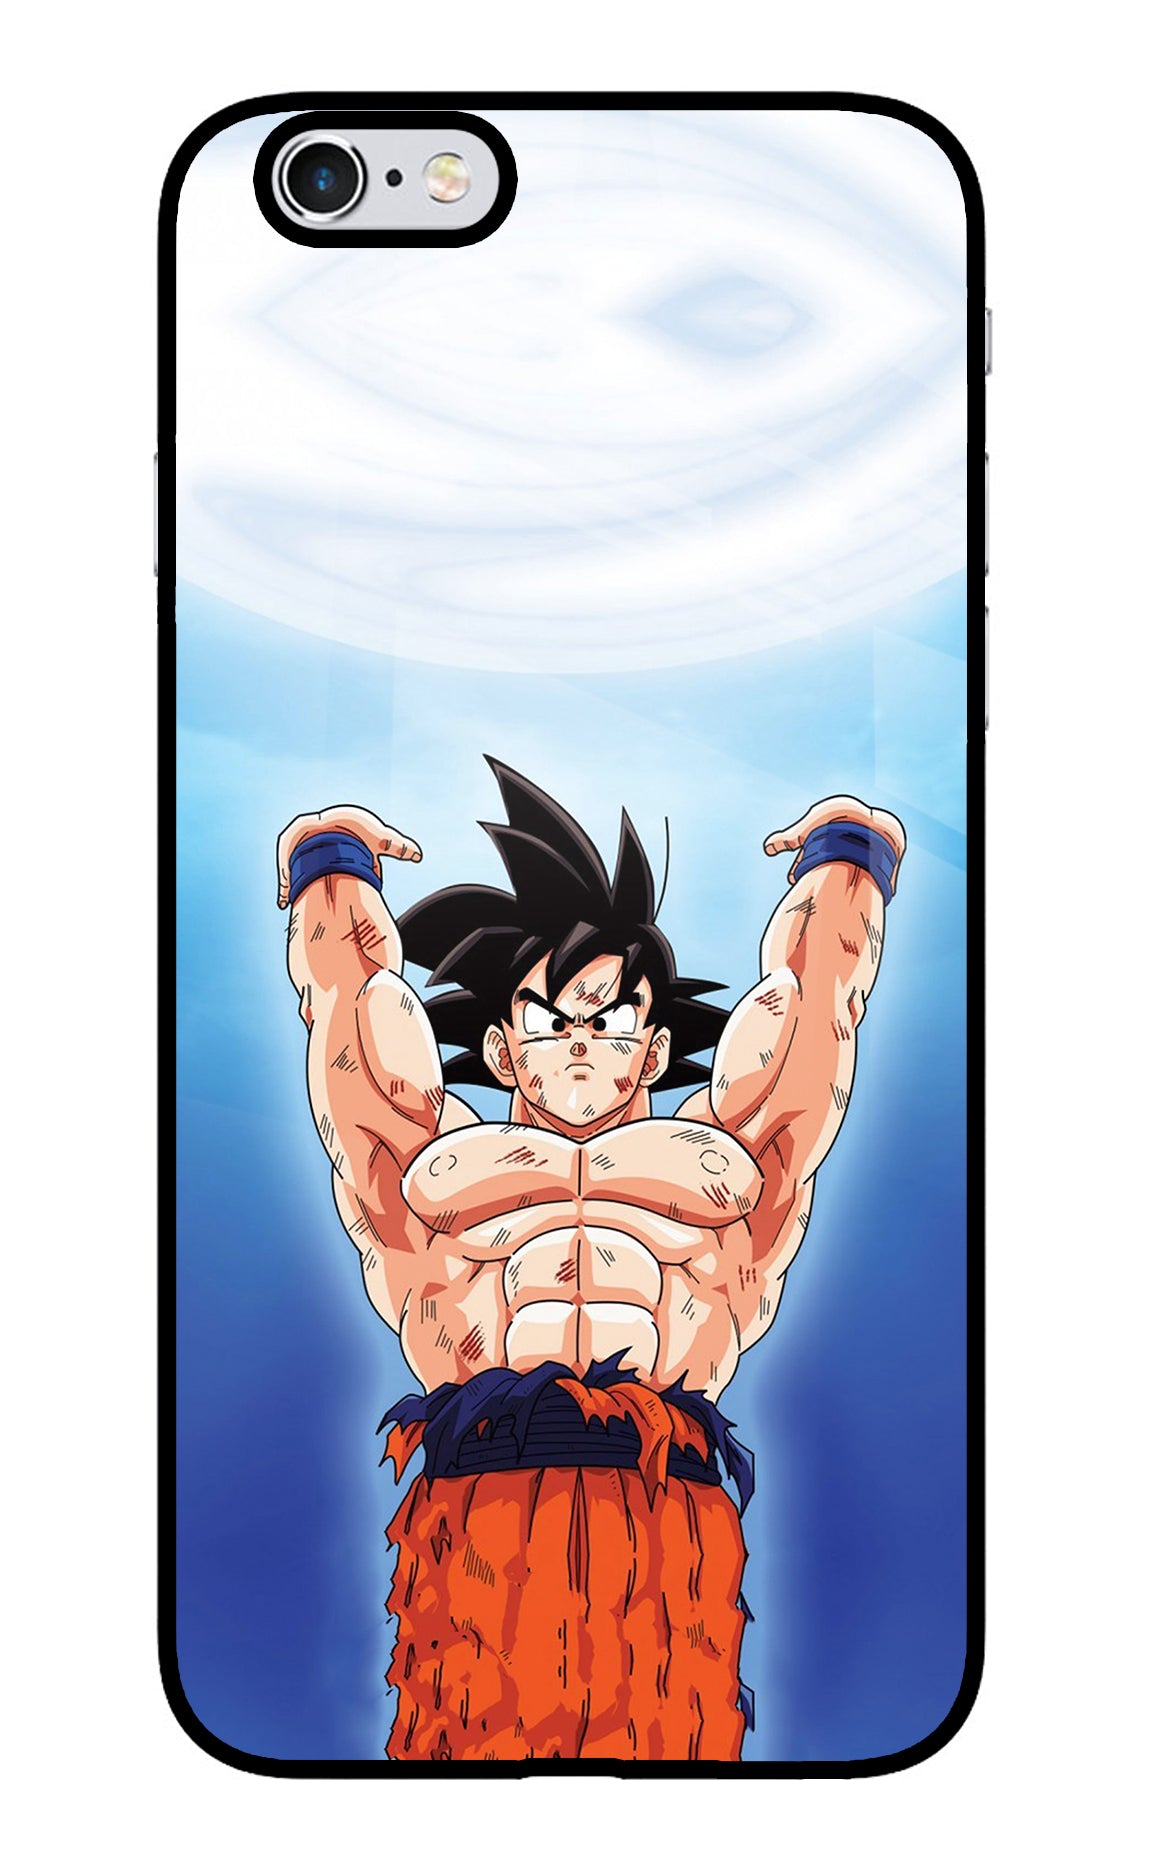 Goku Power iPhone 6/6s Glass Case